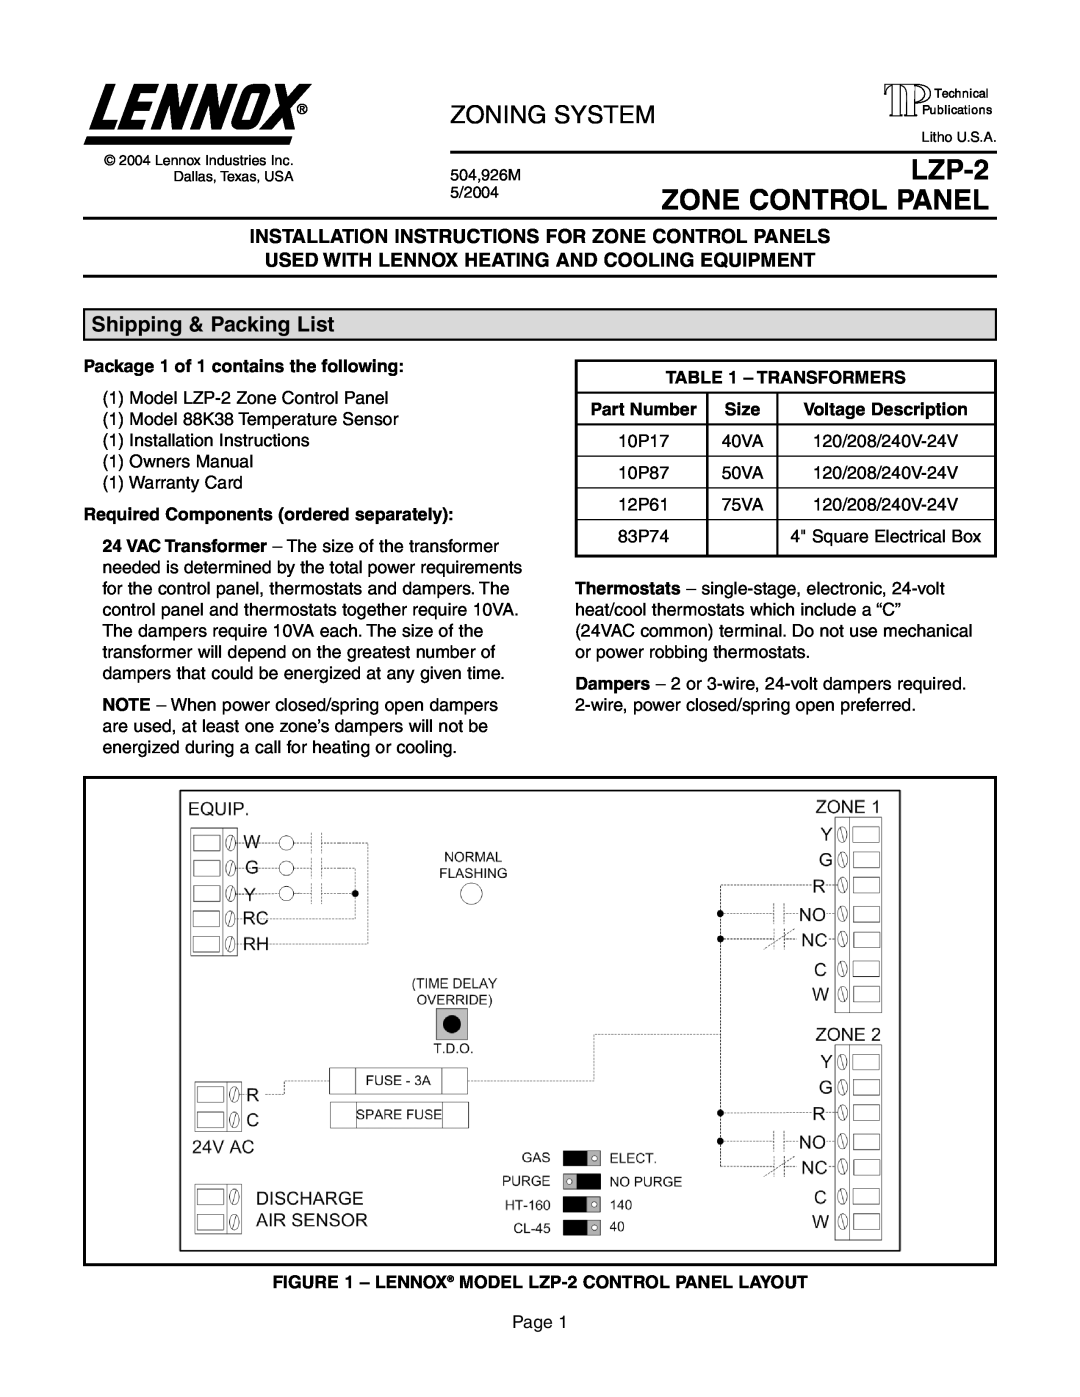 Lennox International Inc owner manual Lennox HVAC Zone Control Model LZP-2, 504,928M 